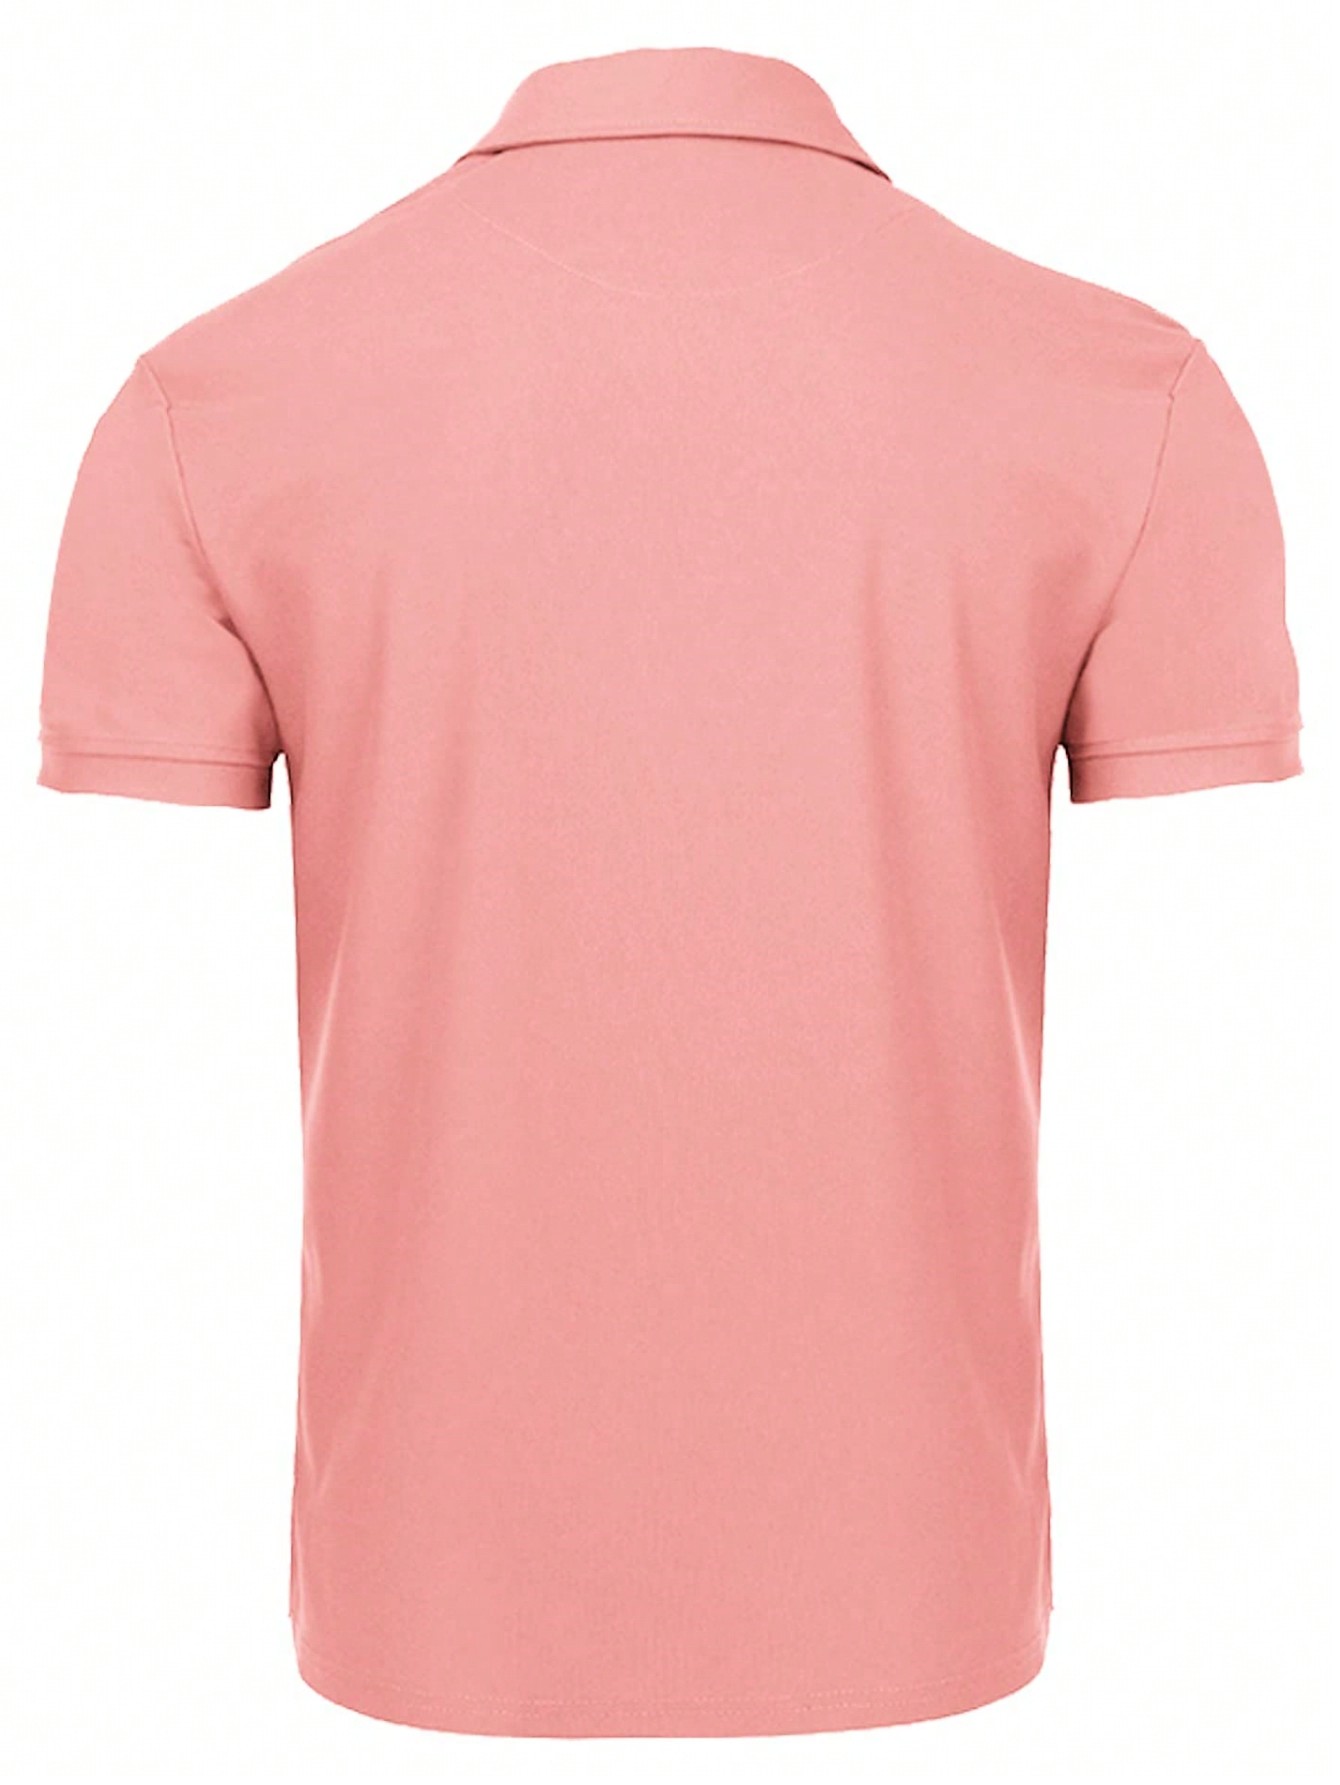 finn flare футболка поло с коротким рукавом мужская Мужская рубашка поло с коротким рукавом для отдыха, арбуз розовый